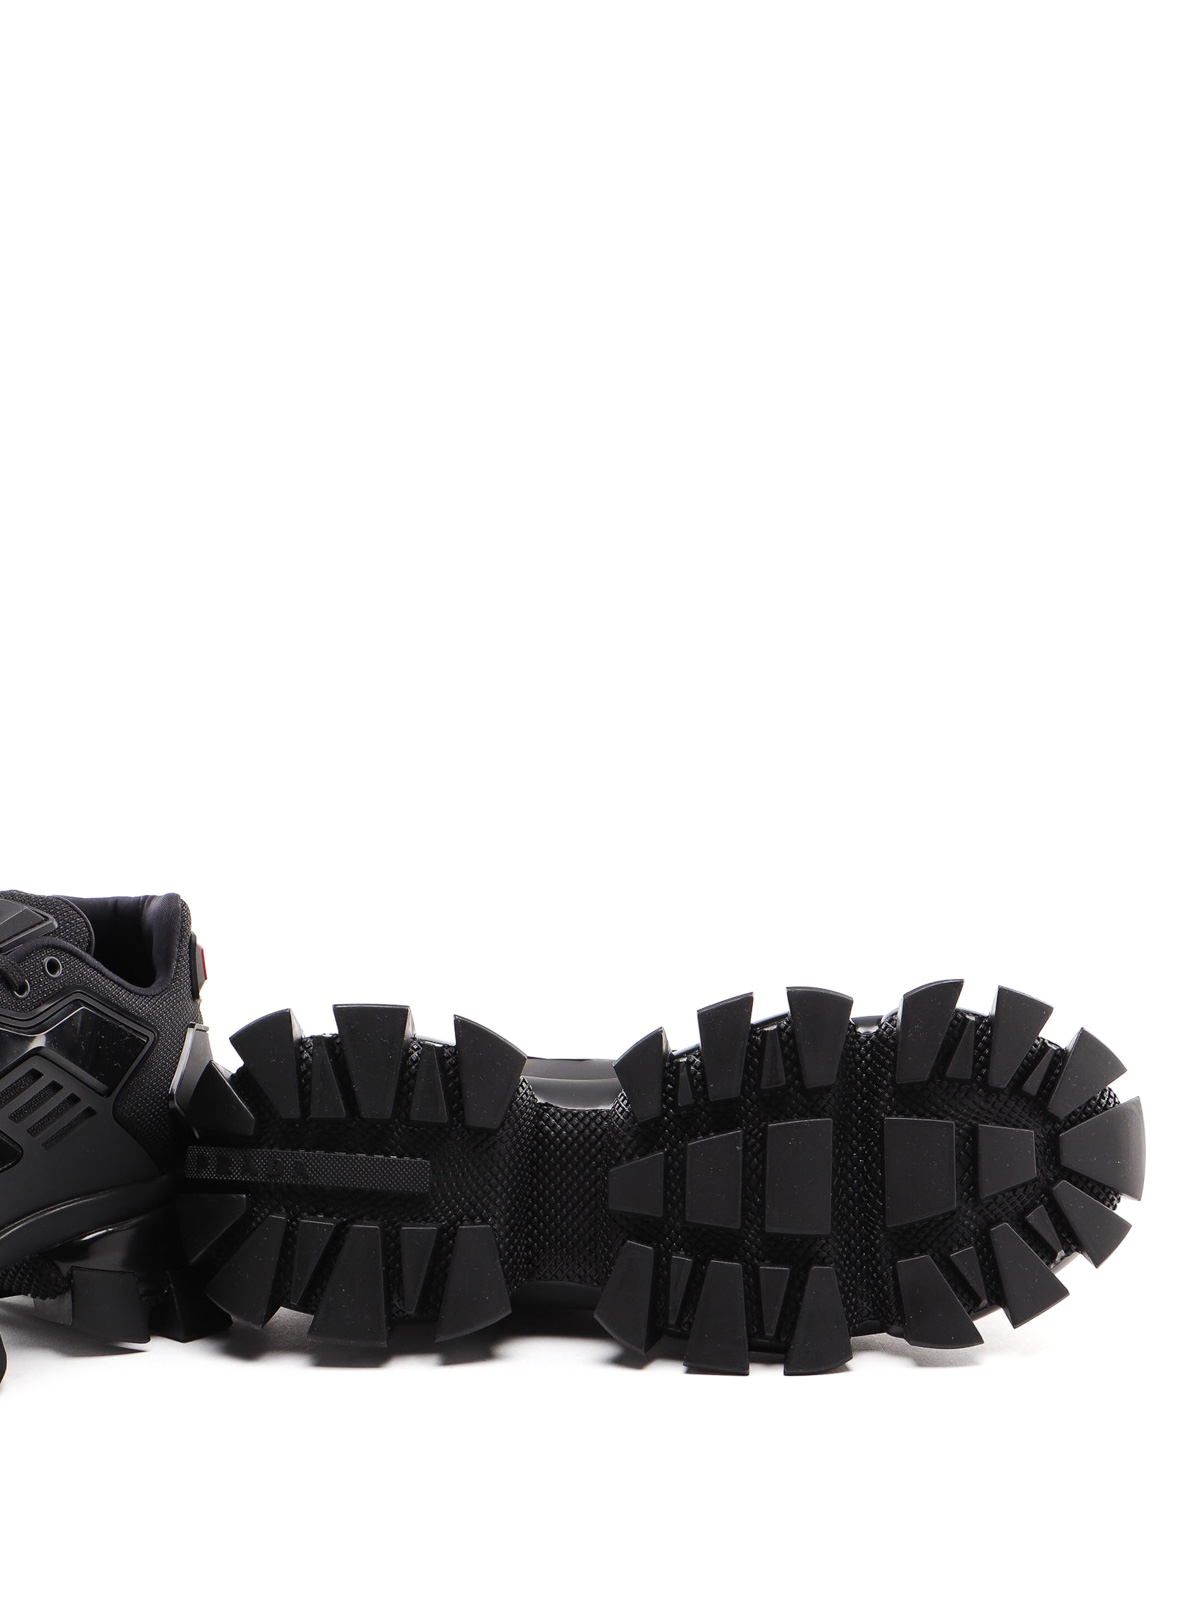 Trainers Prada - Cloudbust Thunder black sneakers - 2EG2933KZU002